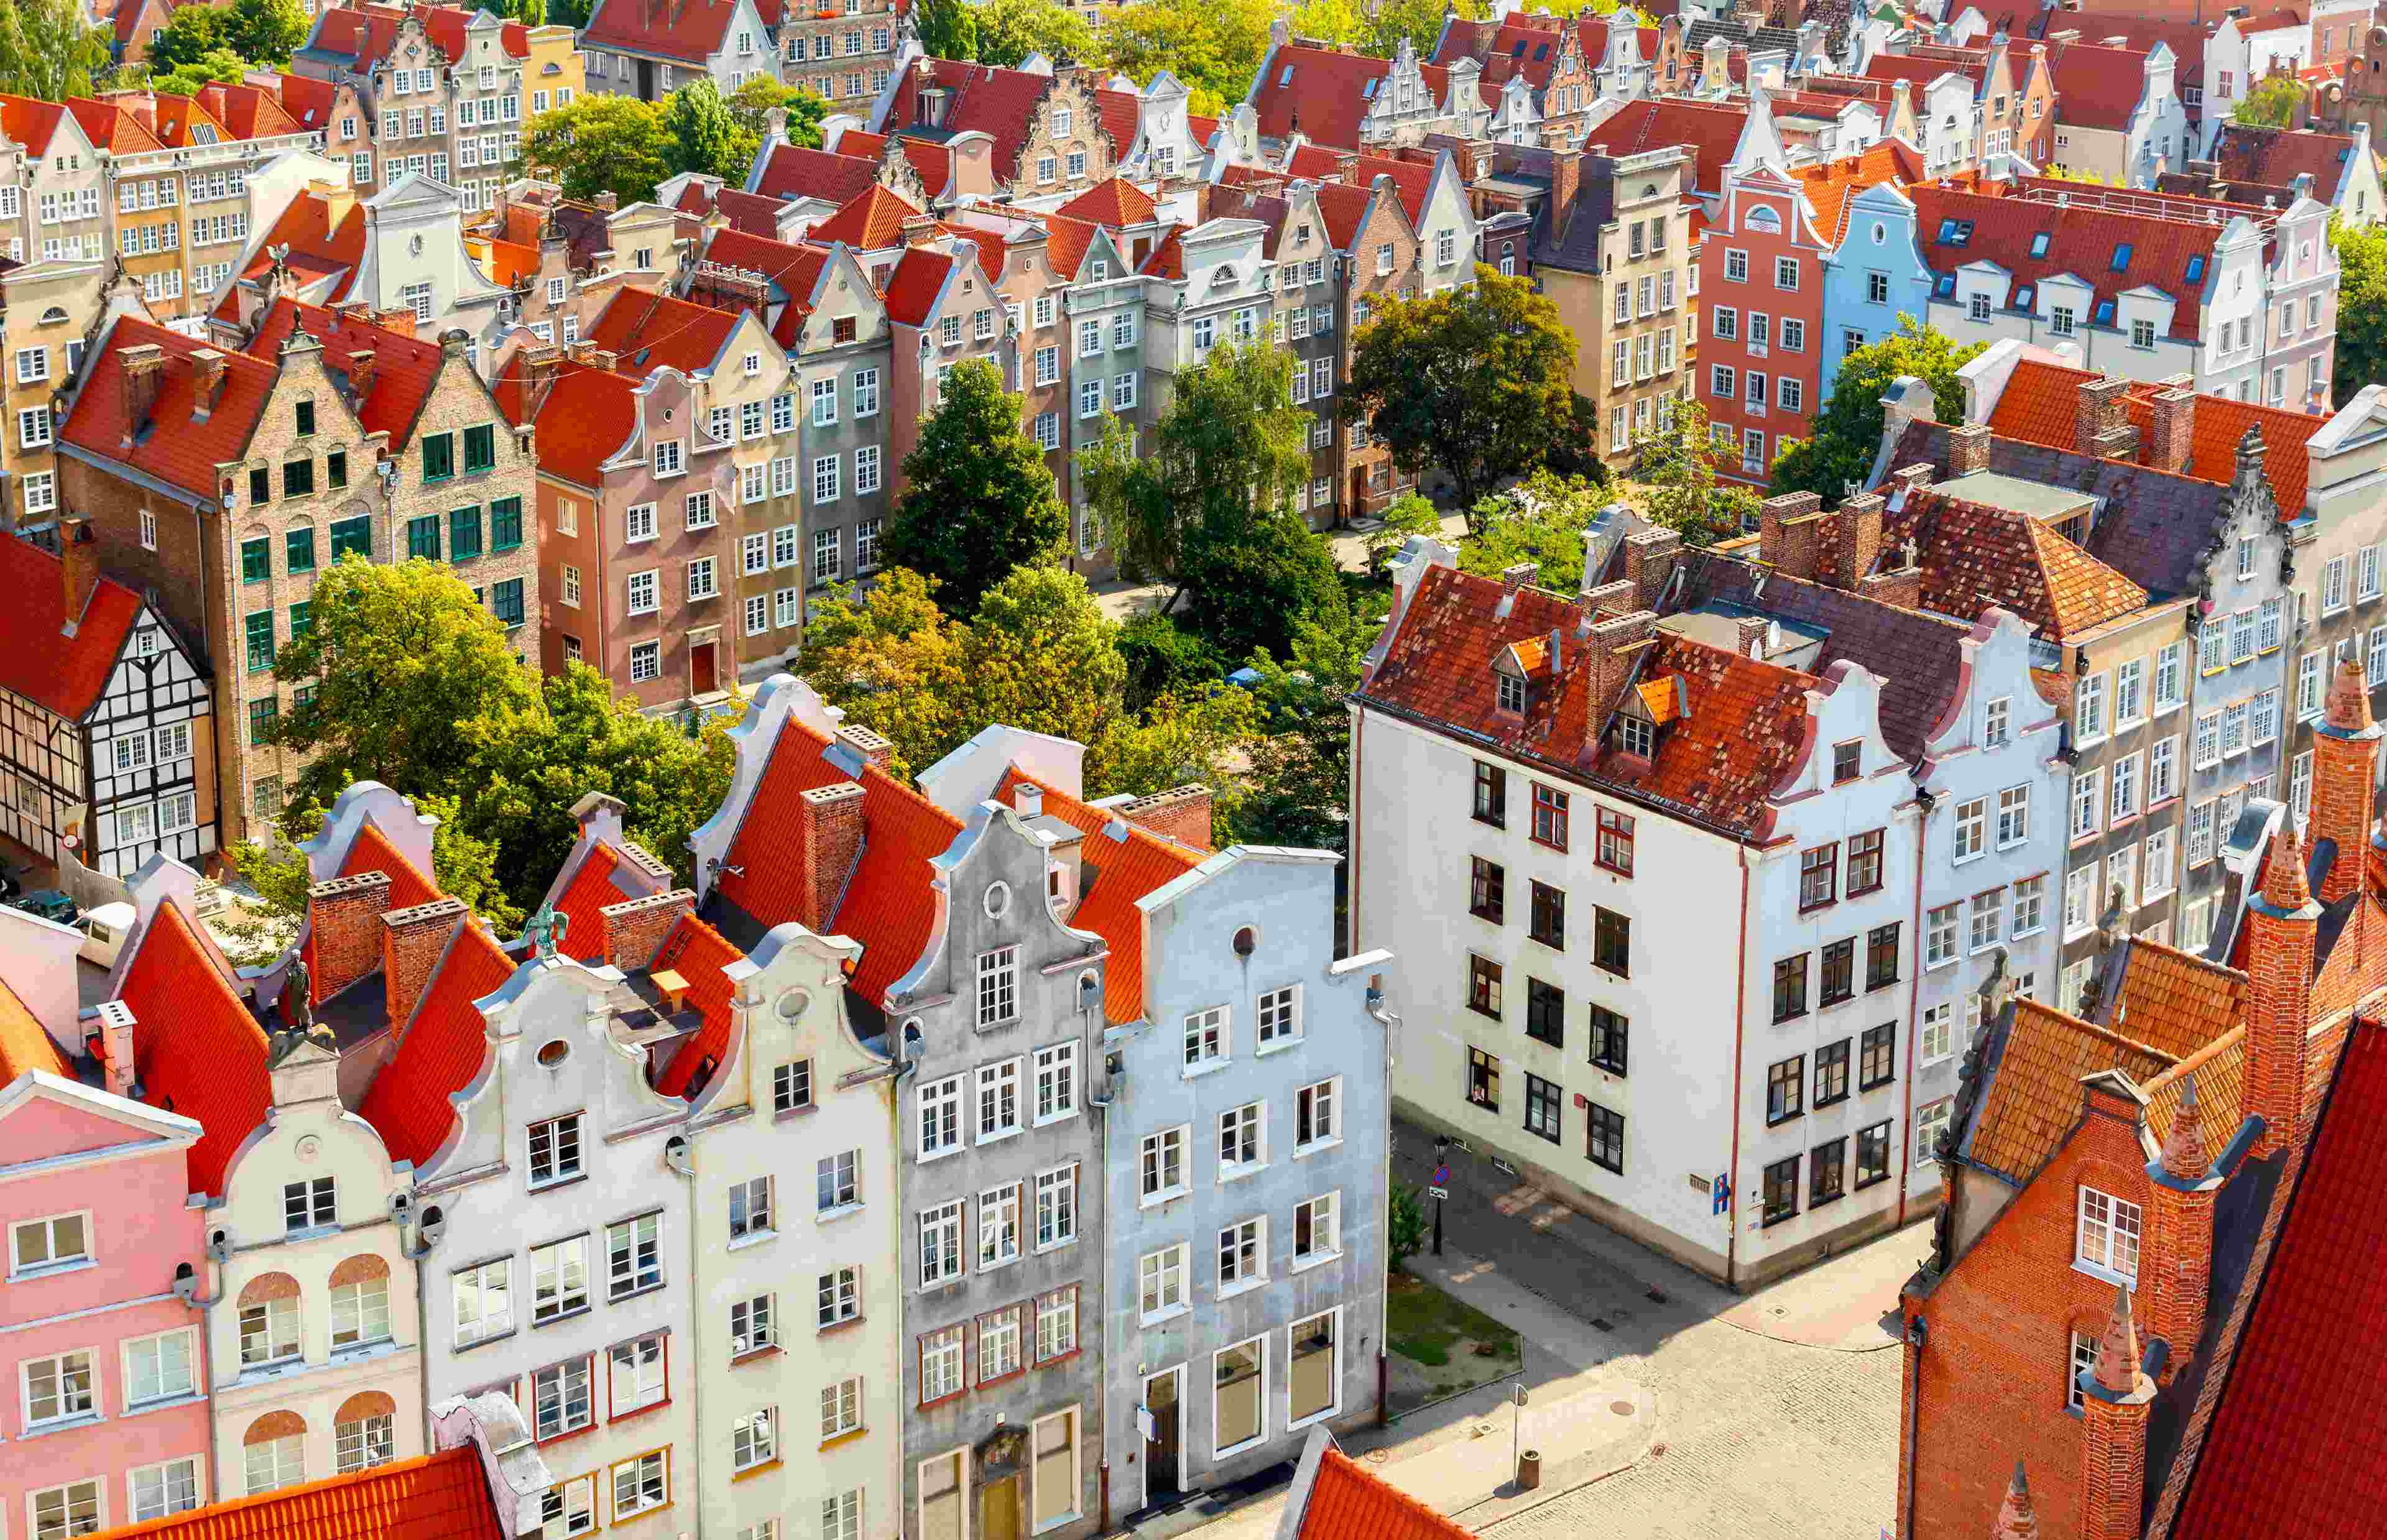 Gdansk town houses (Image: kavalenkau/Shutterstock)